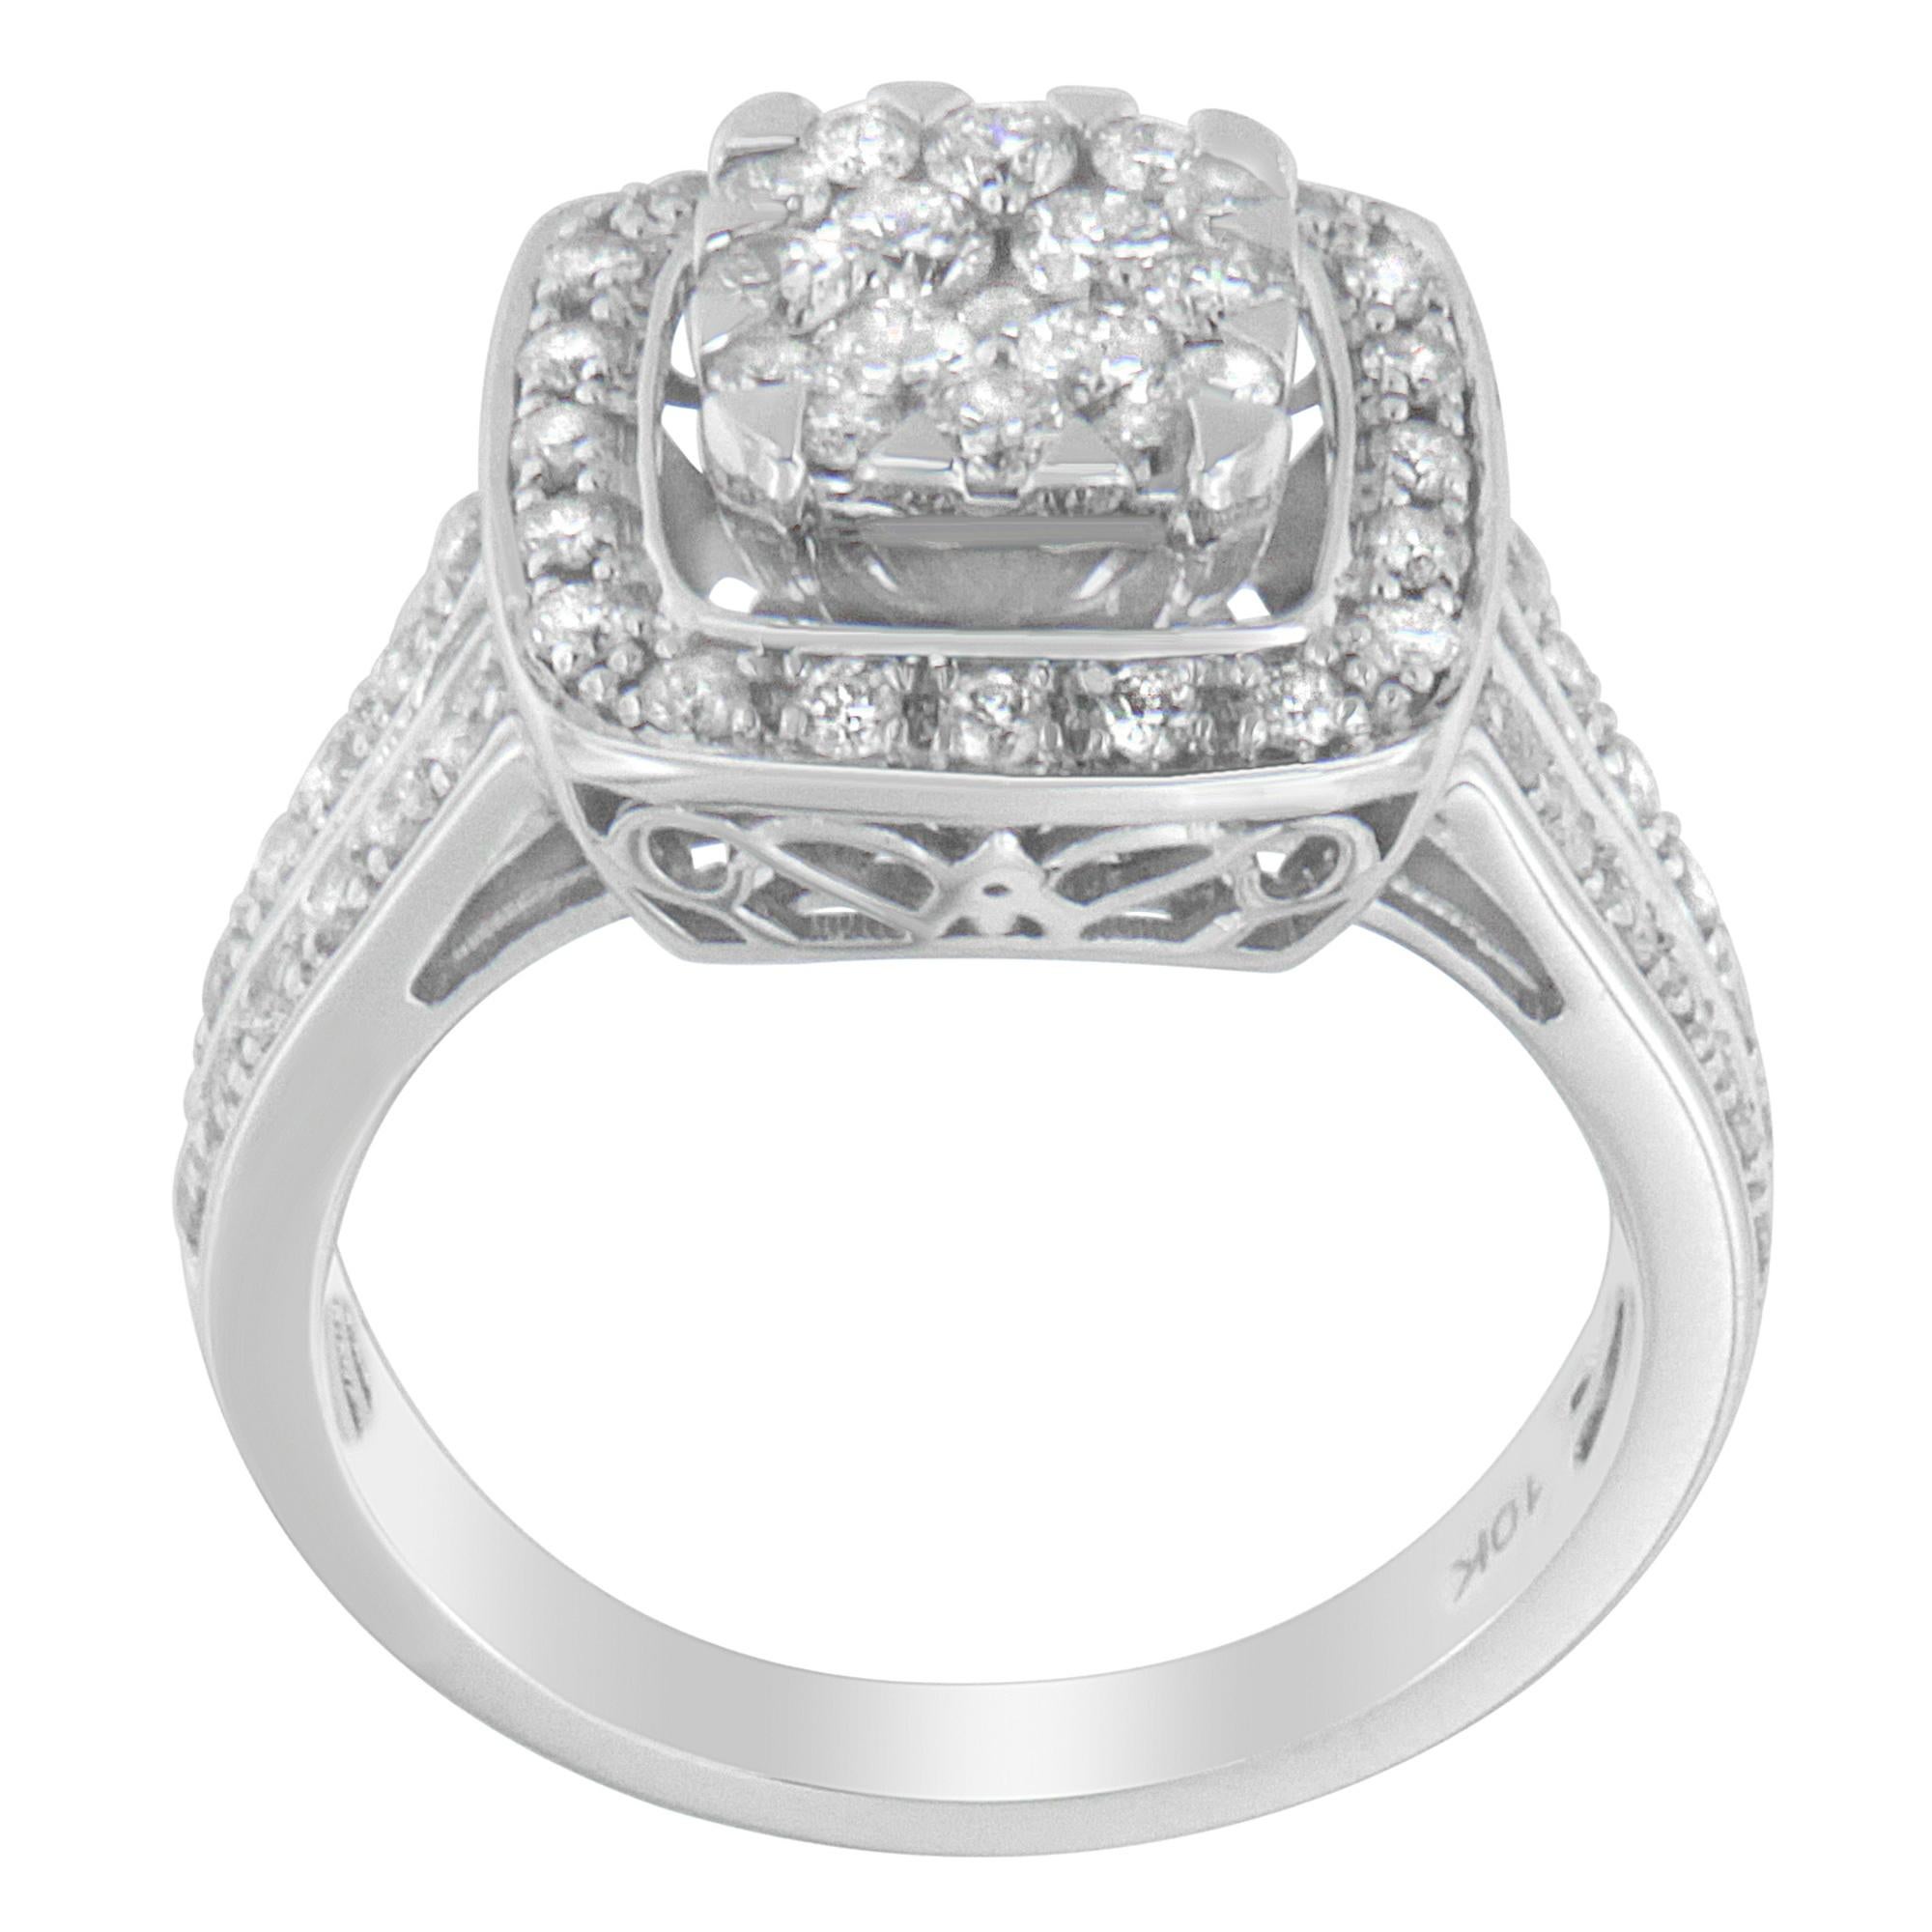 For Sale:  10K White Gold 1.00 Carat Diamond Cluster Ring 3